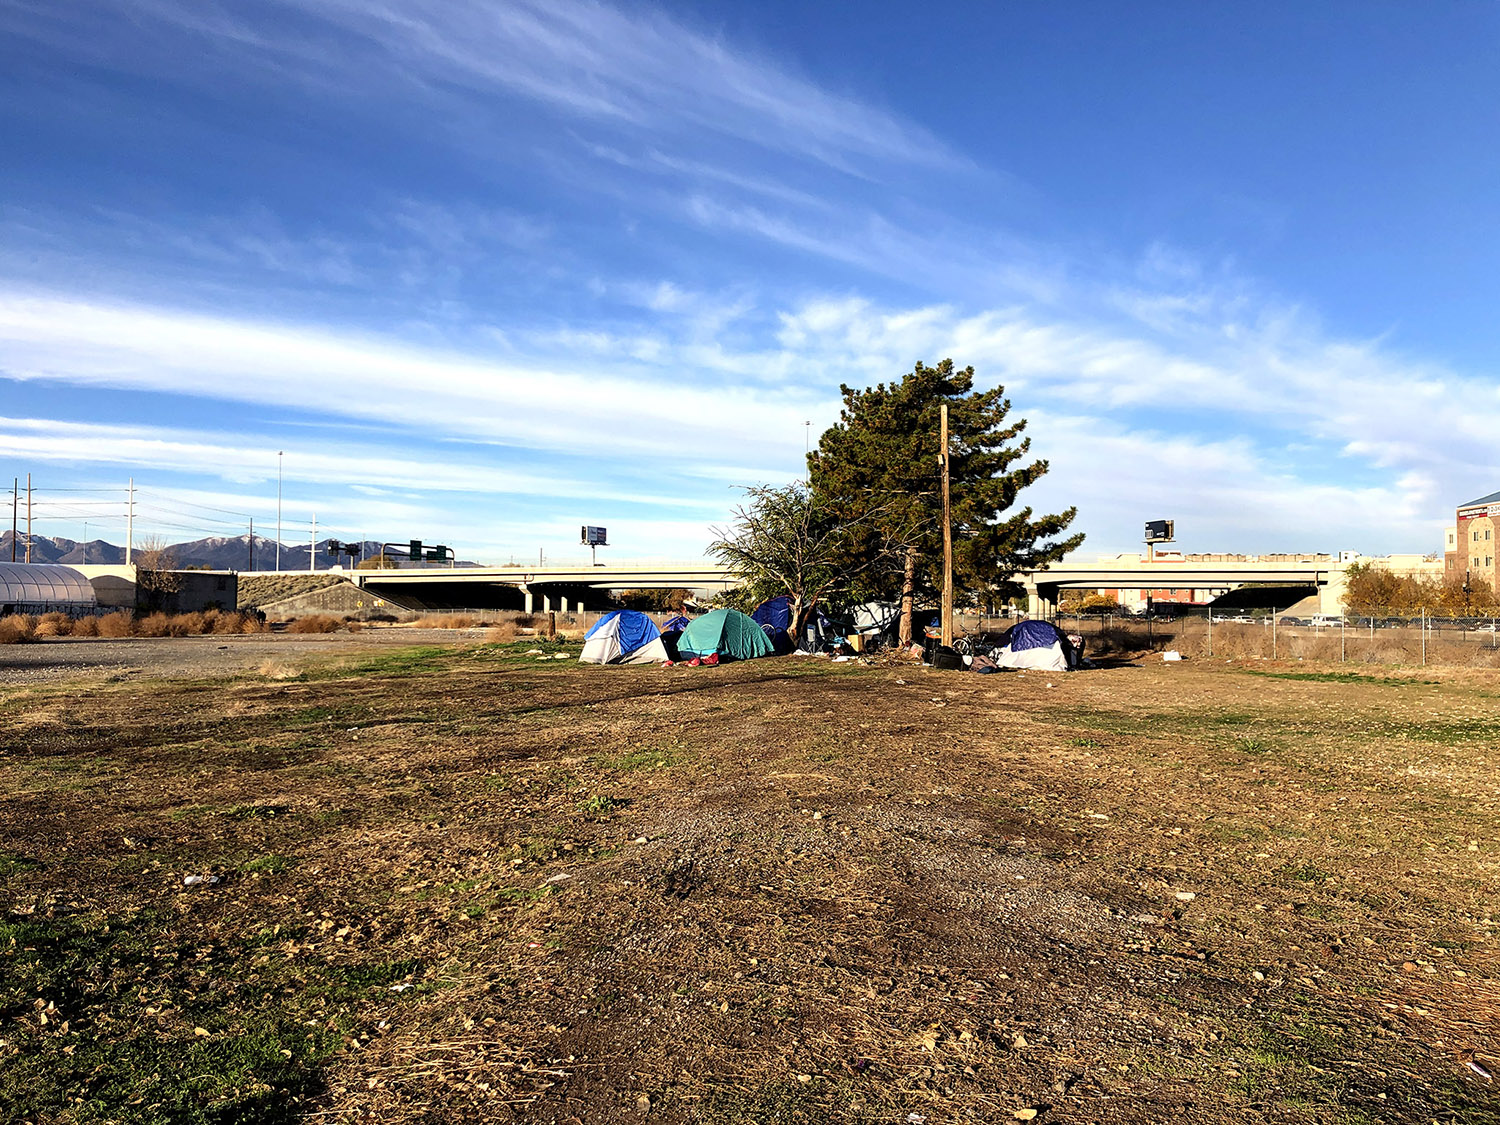 Goathead Camp in Salt Lake City